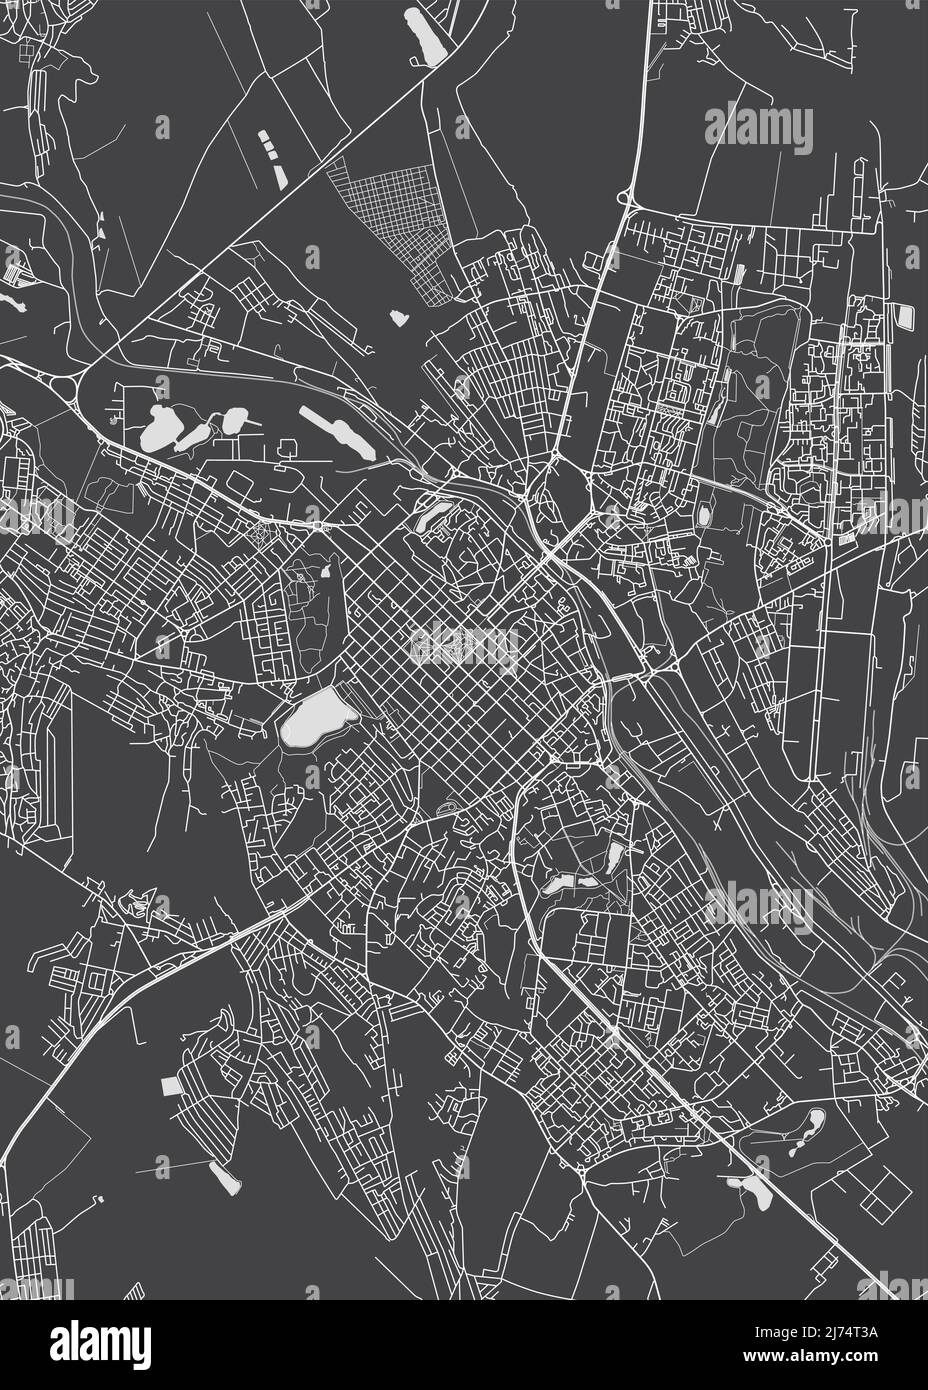 Stadtplan Chisinau, monochromer Detailplan, Vektorgrafik Stock Vektor